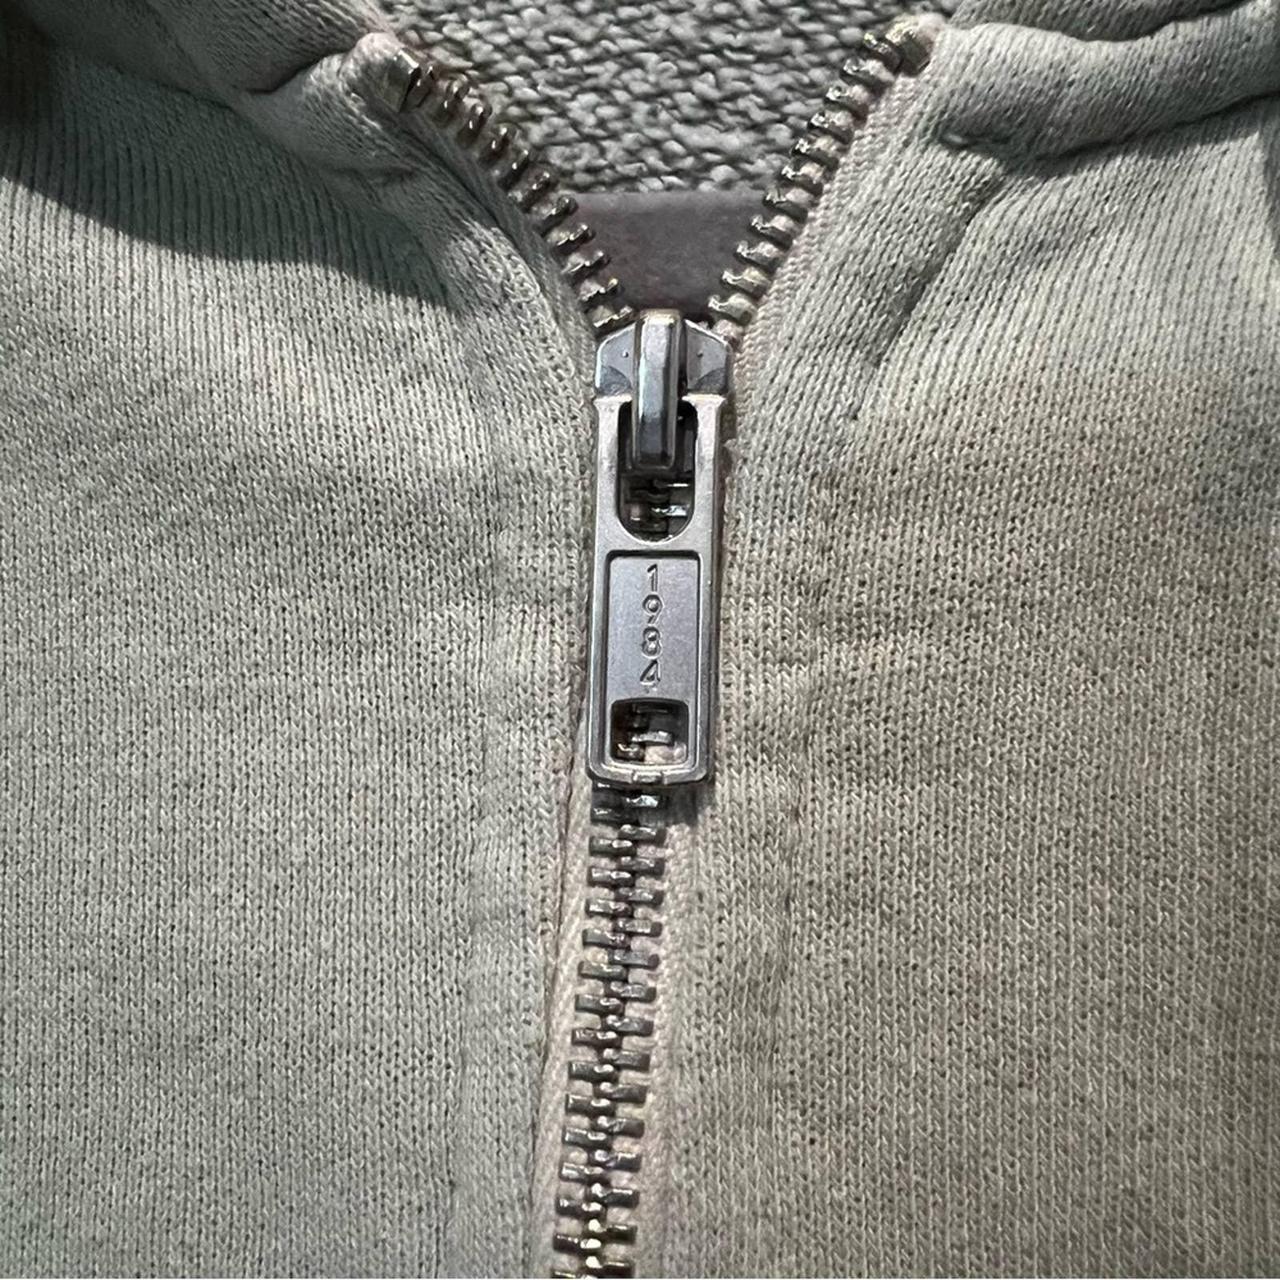 Brandy Melville Light Green Zip-Up Hoodie Sweatshirt - M/L (Approx